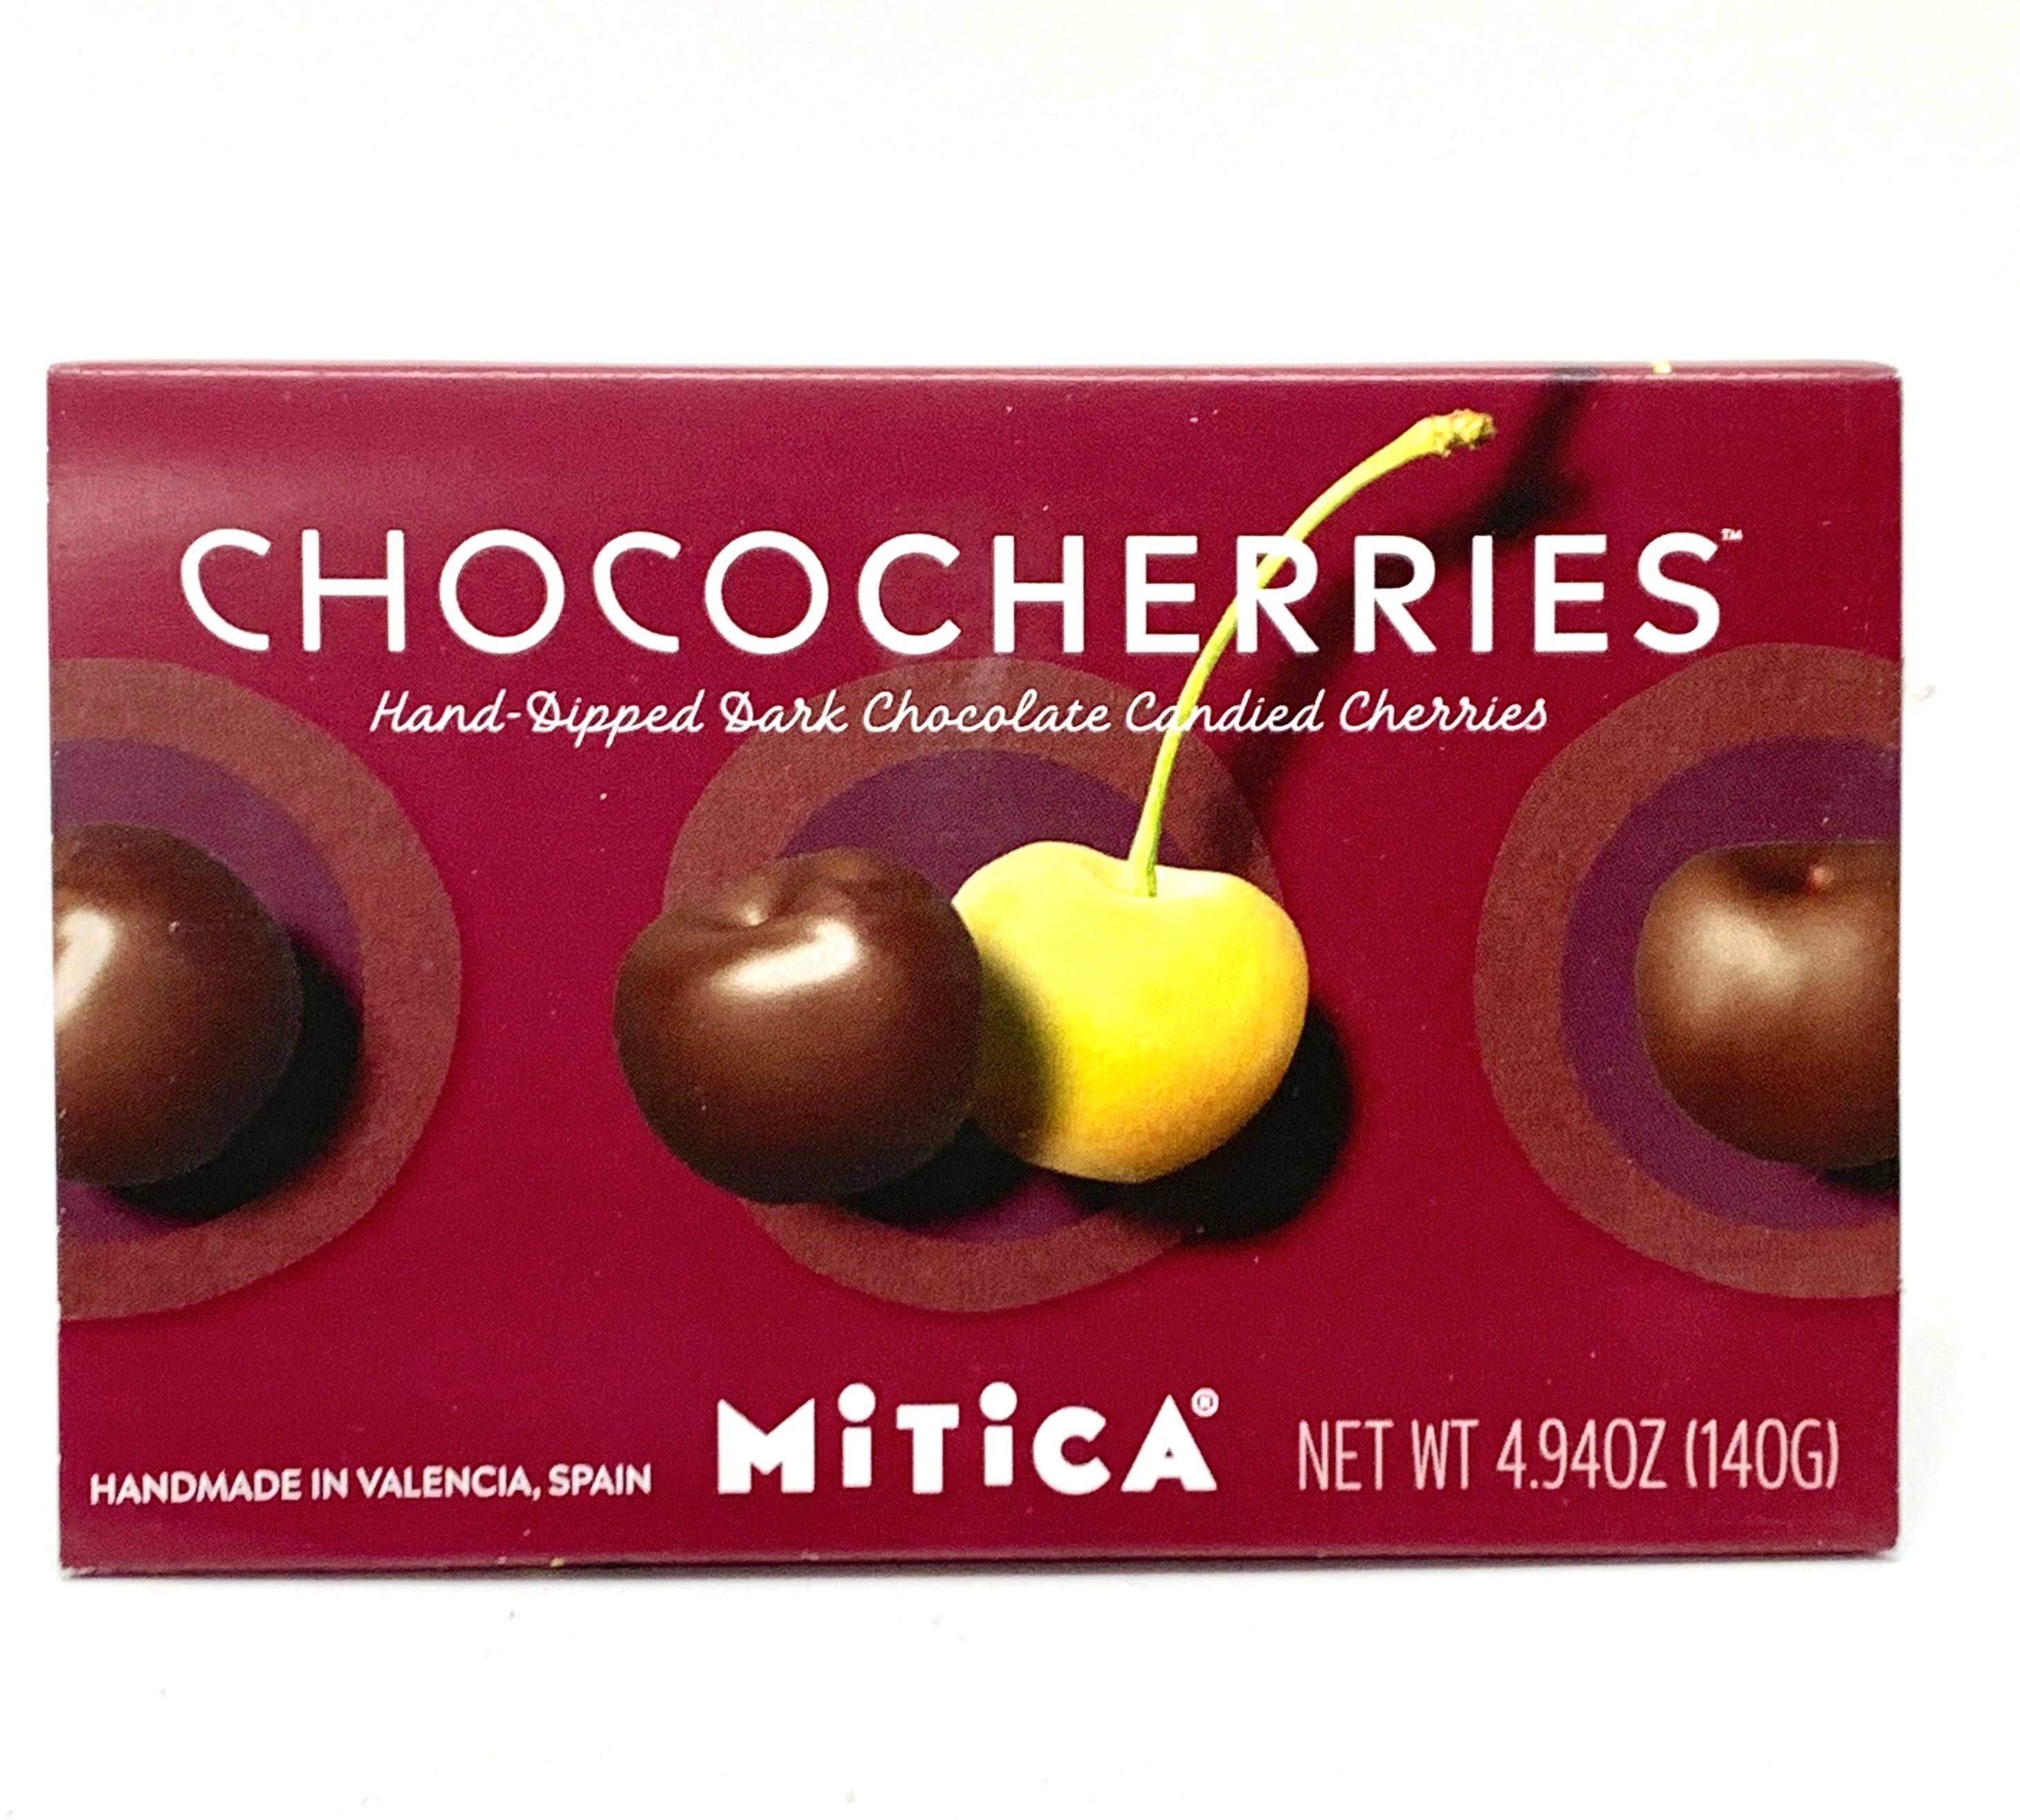 MITICA Chocolate Cherries, 4.94 OZ